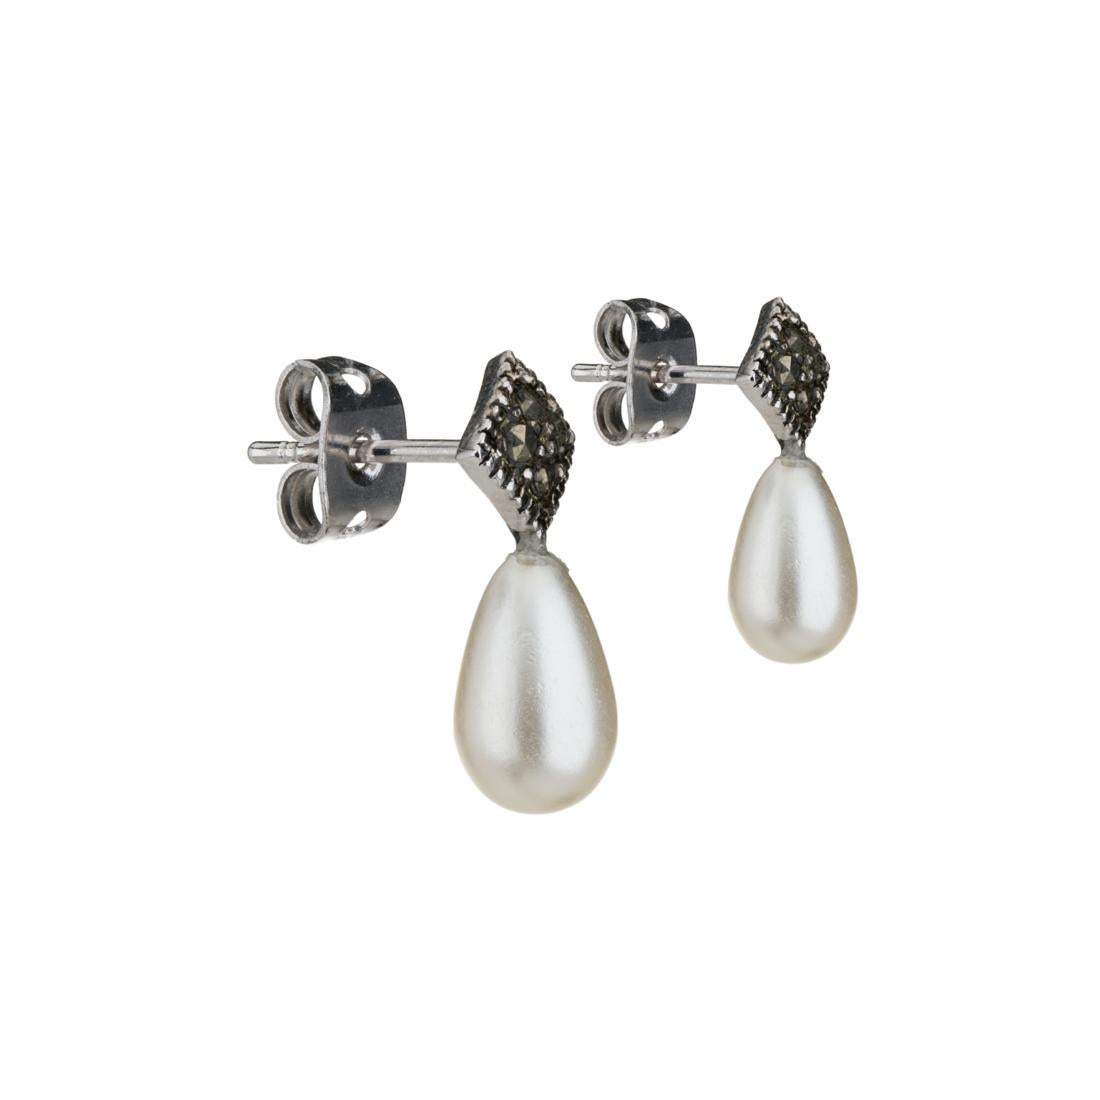 Freshwater Pearl & Marcasite Drop Earrings - Shop Thrifty Treasures